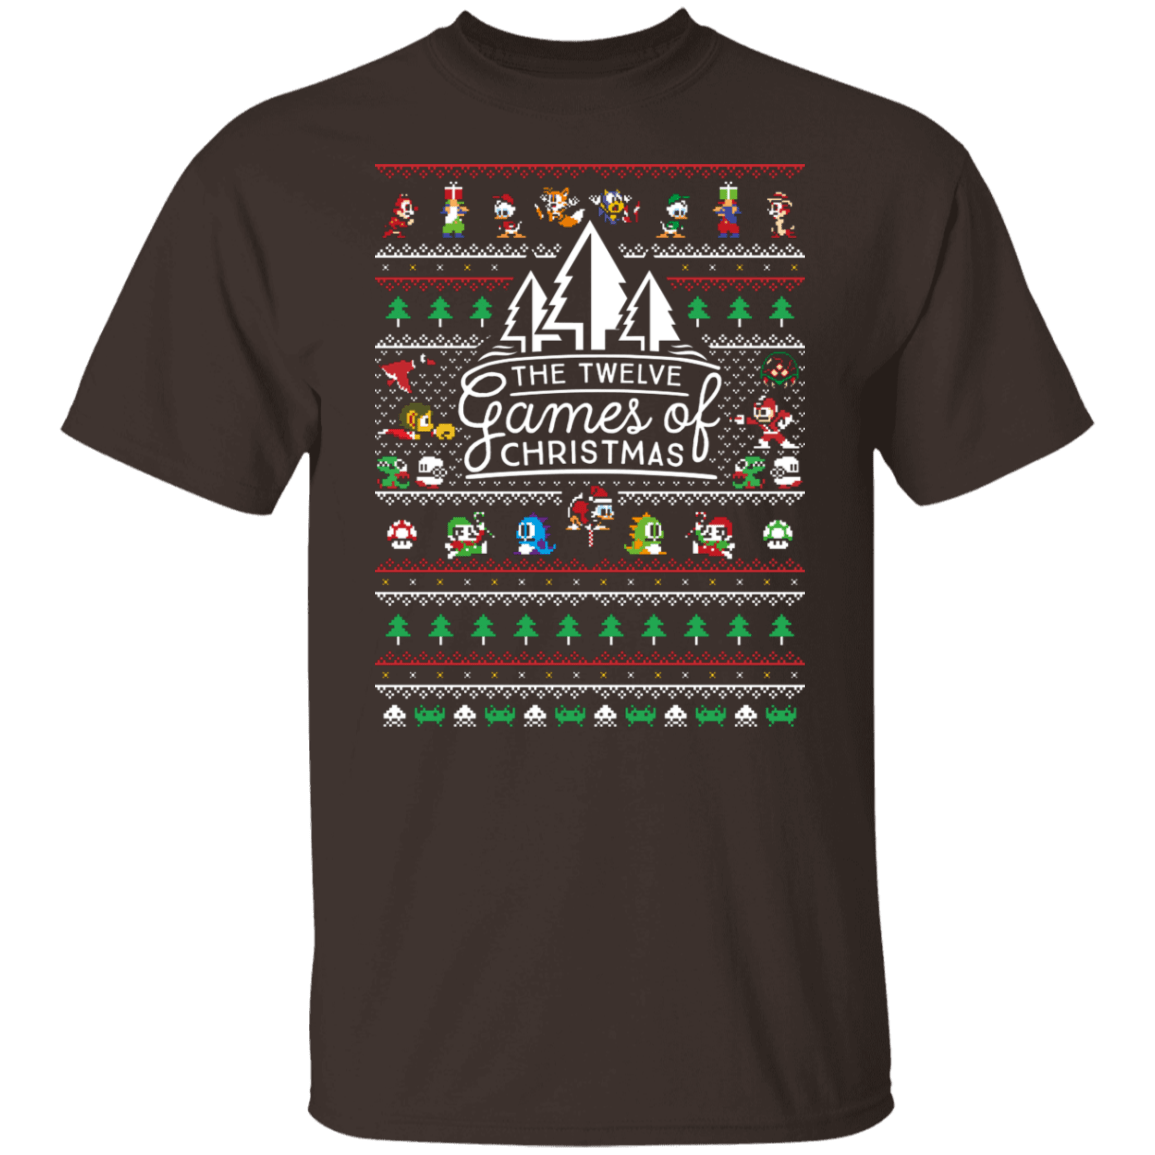 T-Shirts Dark Chocolate / S 12 Games of Christmas T-Shirt